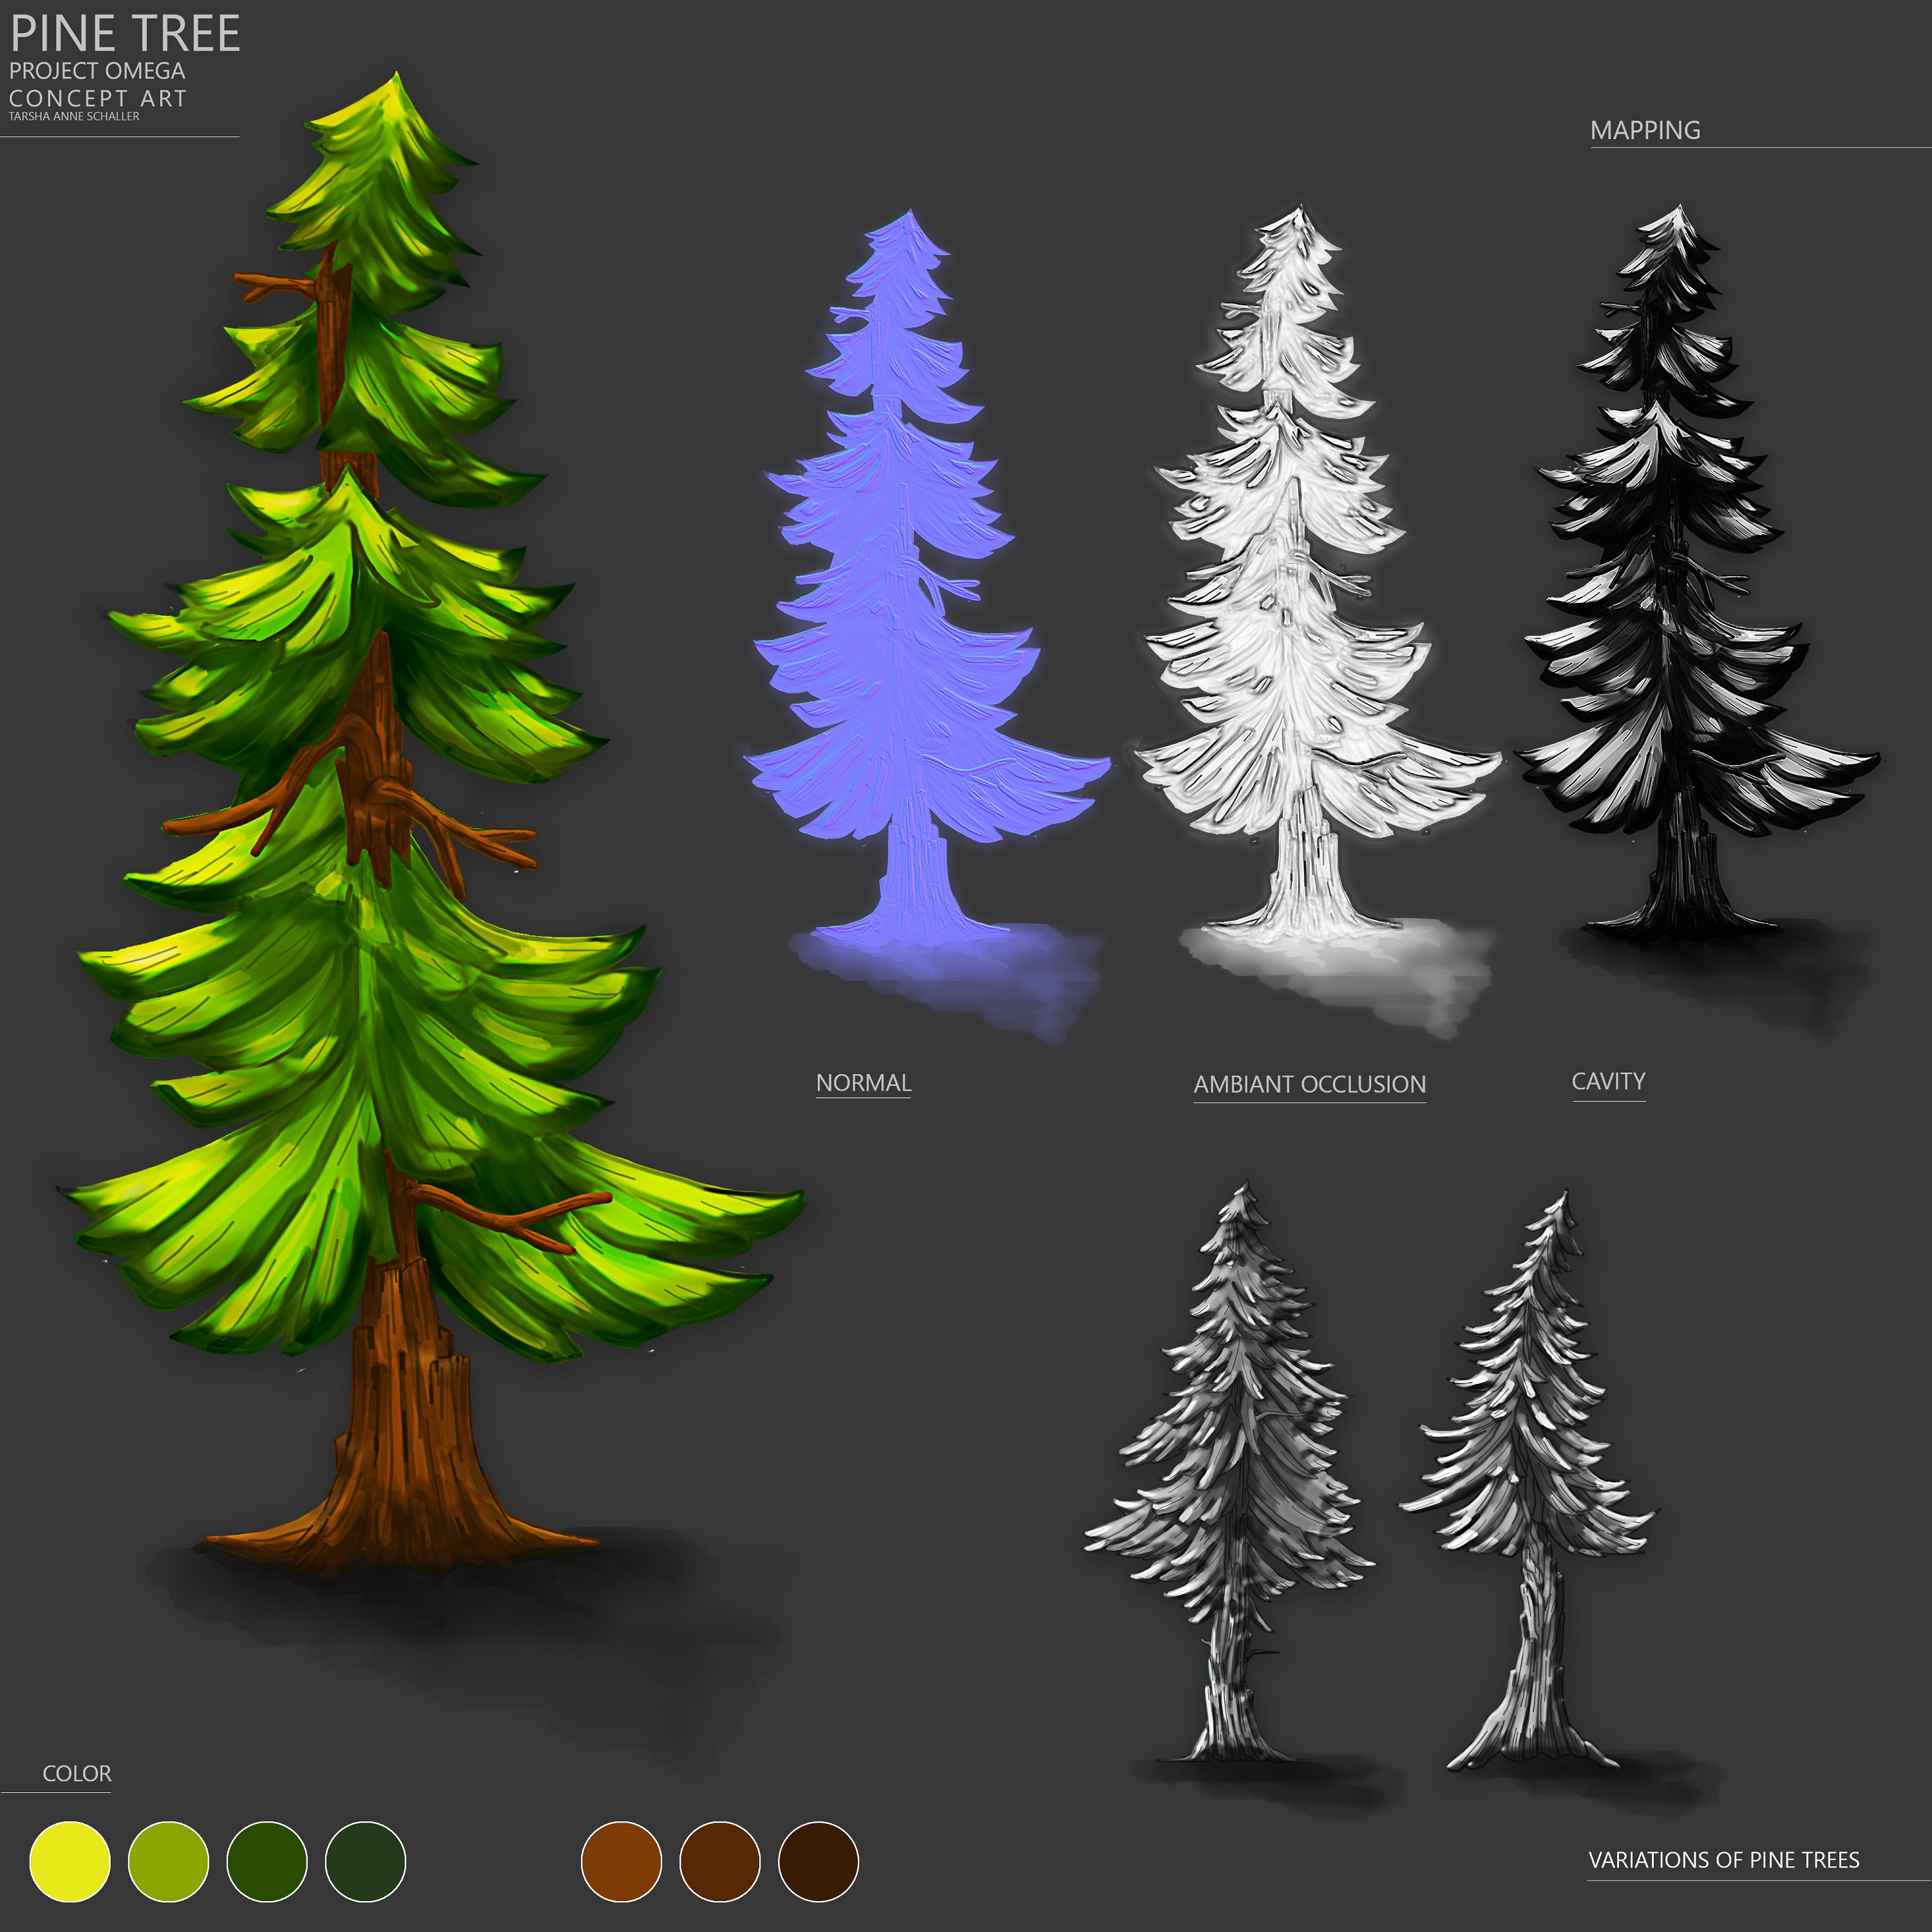 Tree concepts